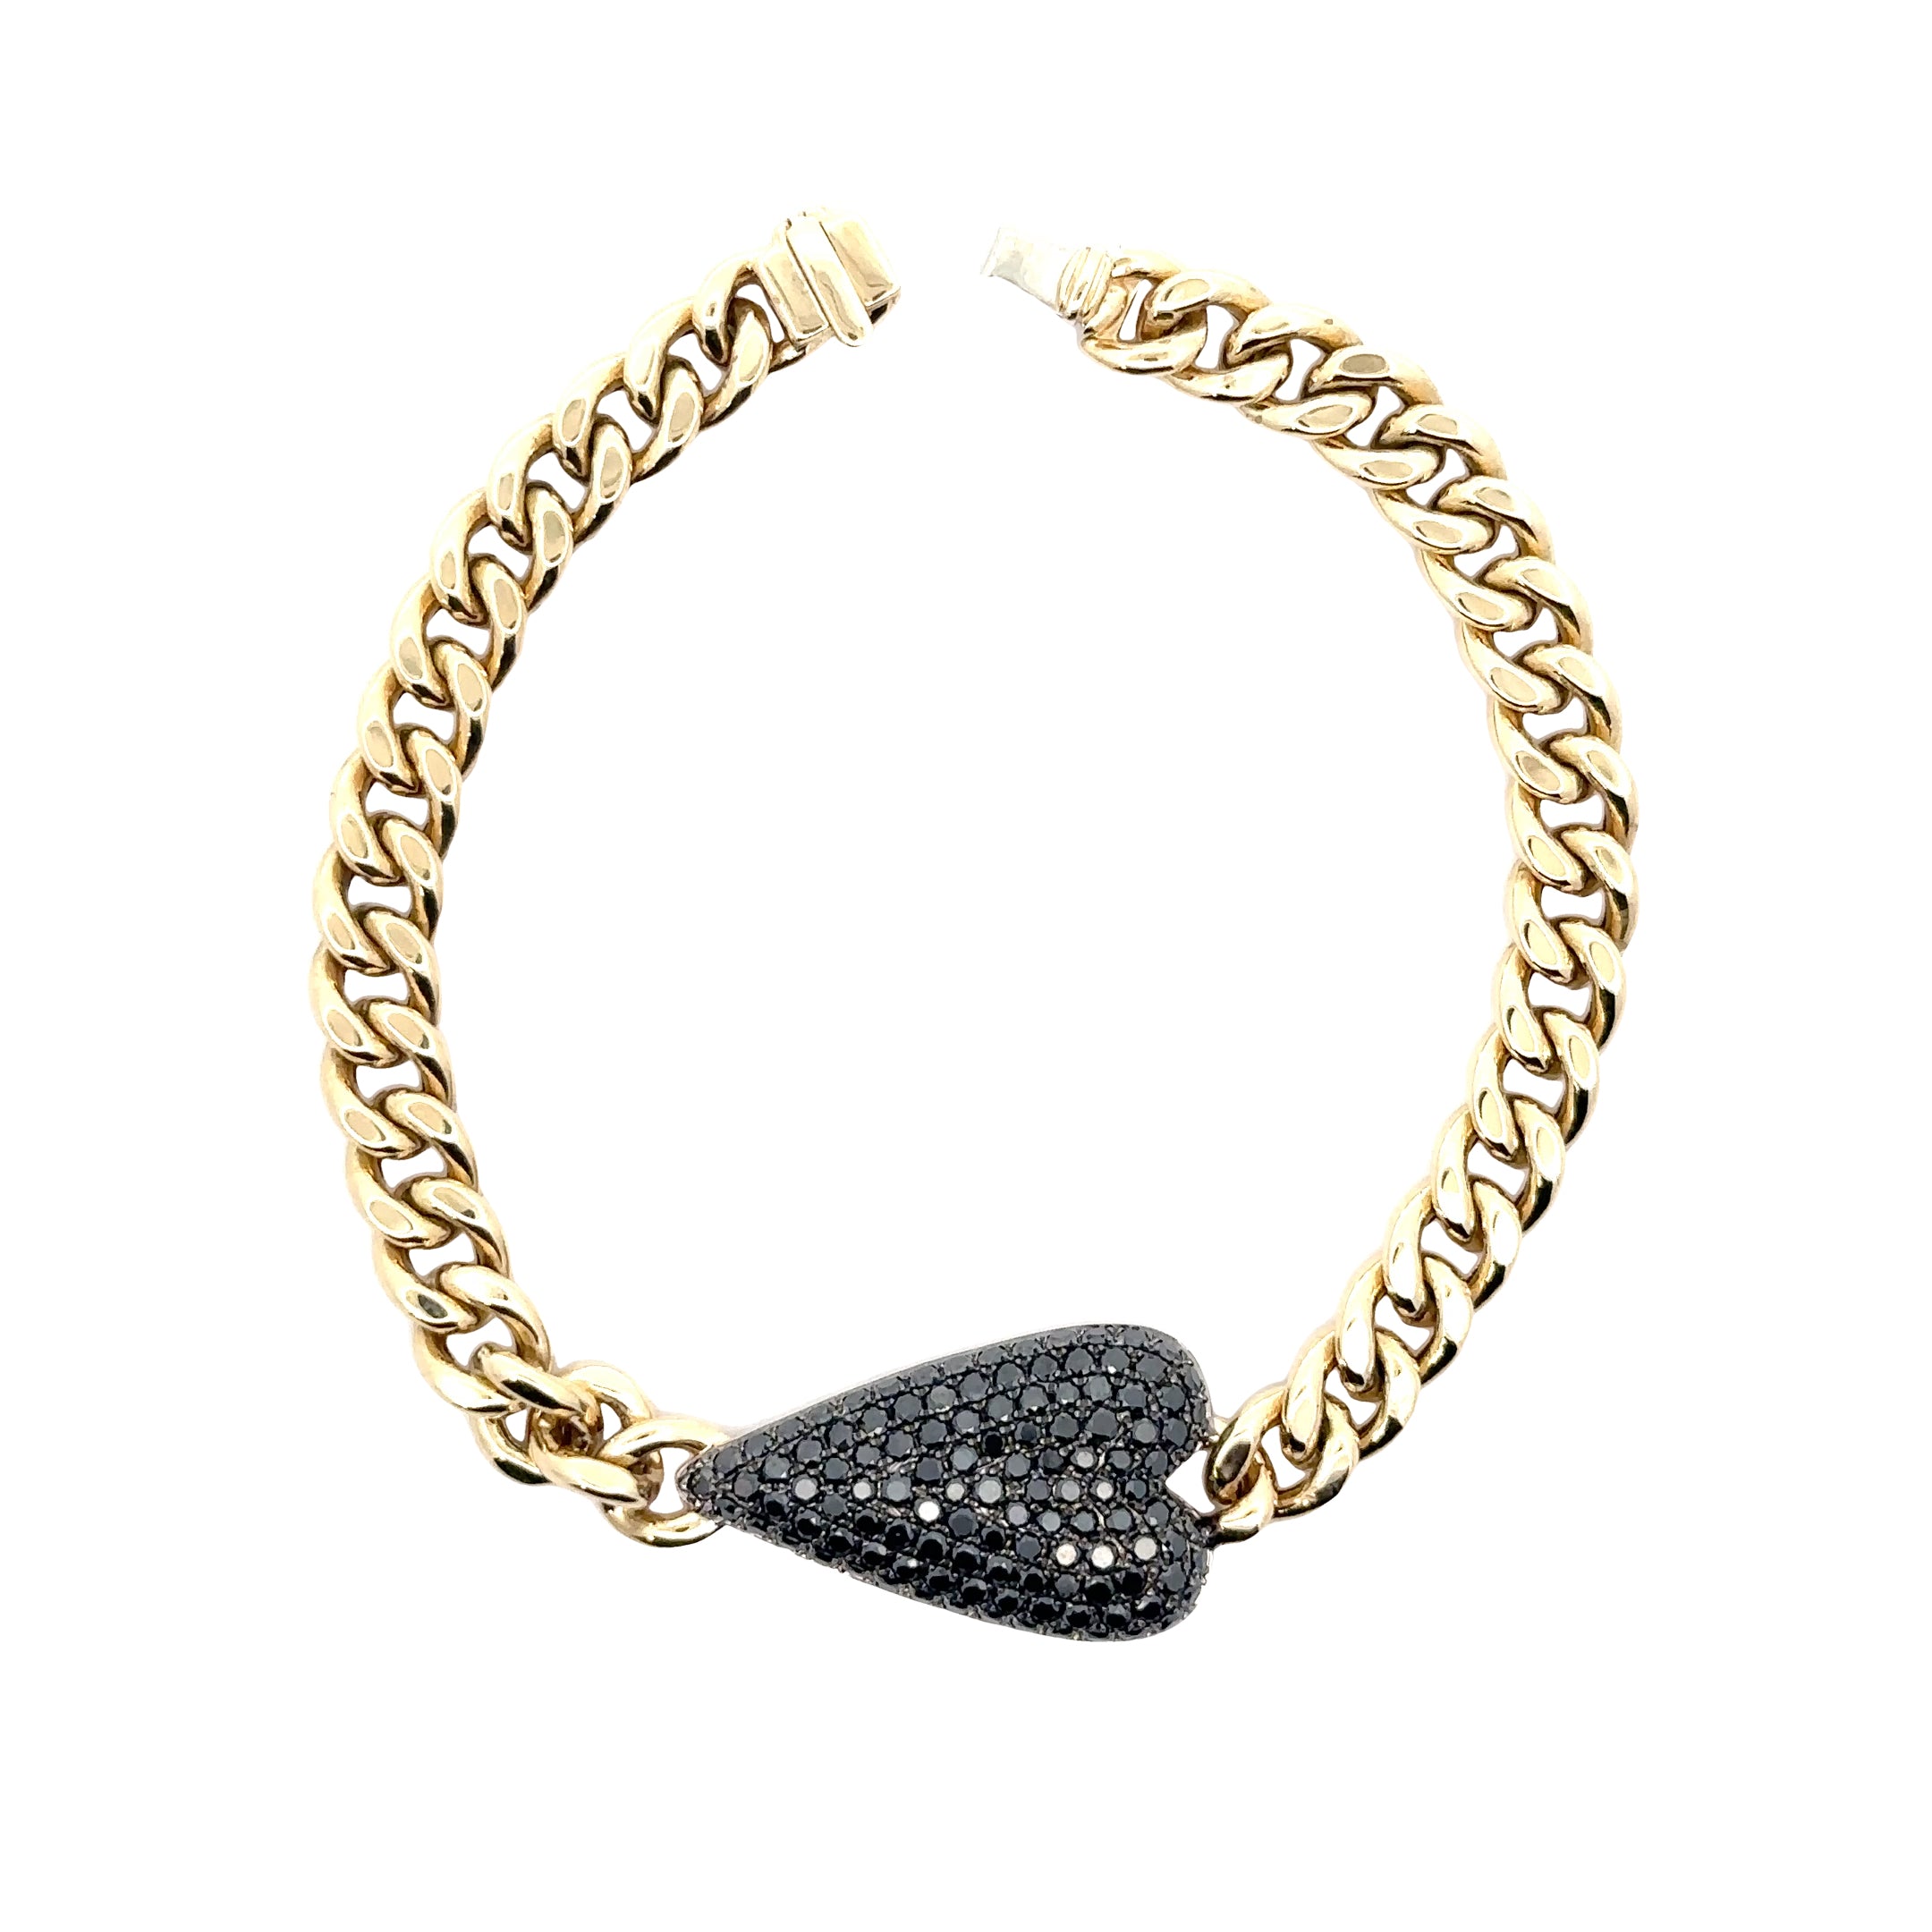 WD1286 14kt Gold Cuban Link Chain with Pave Black Diamond Heart Bracelet